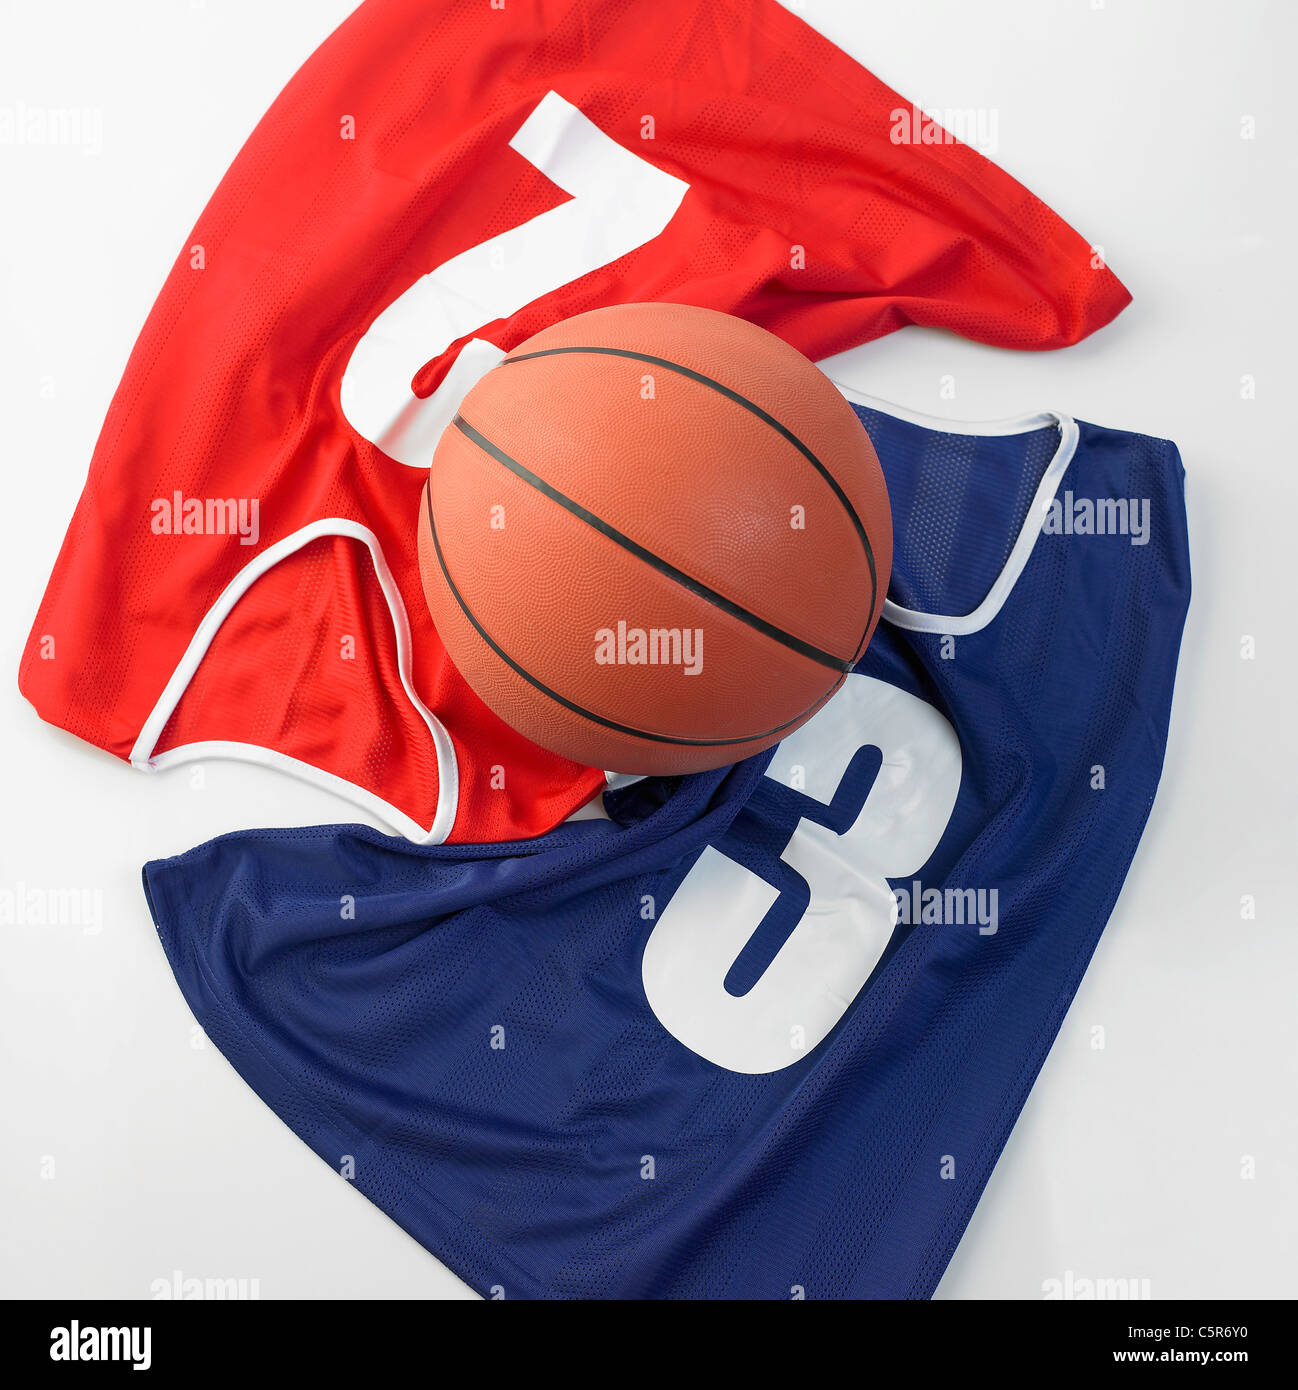 Uniformes de baloncesto fotografías e imágenes de alta resolución - Alamy